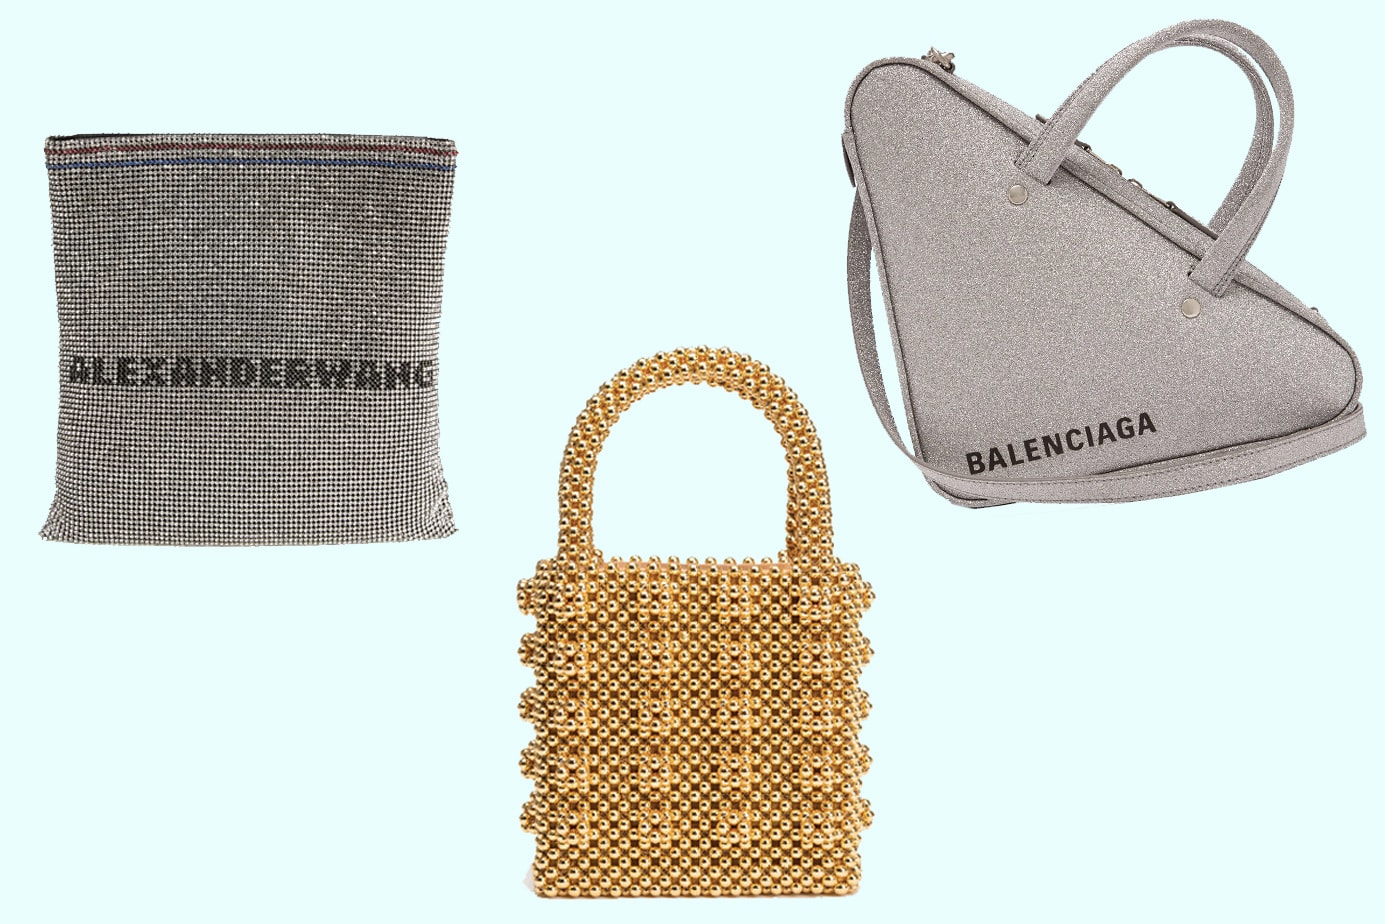 Designer Bags in Silver, Metallic and Glitter